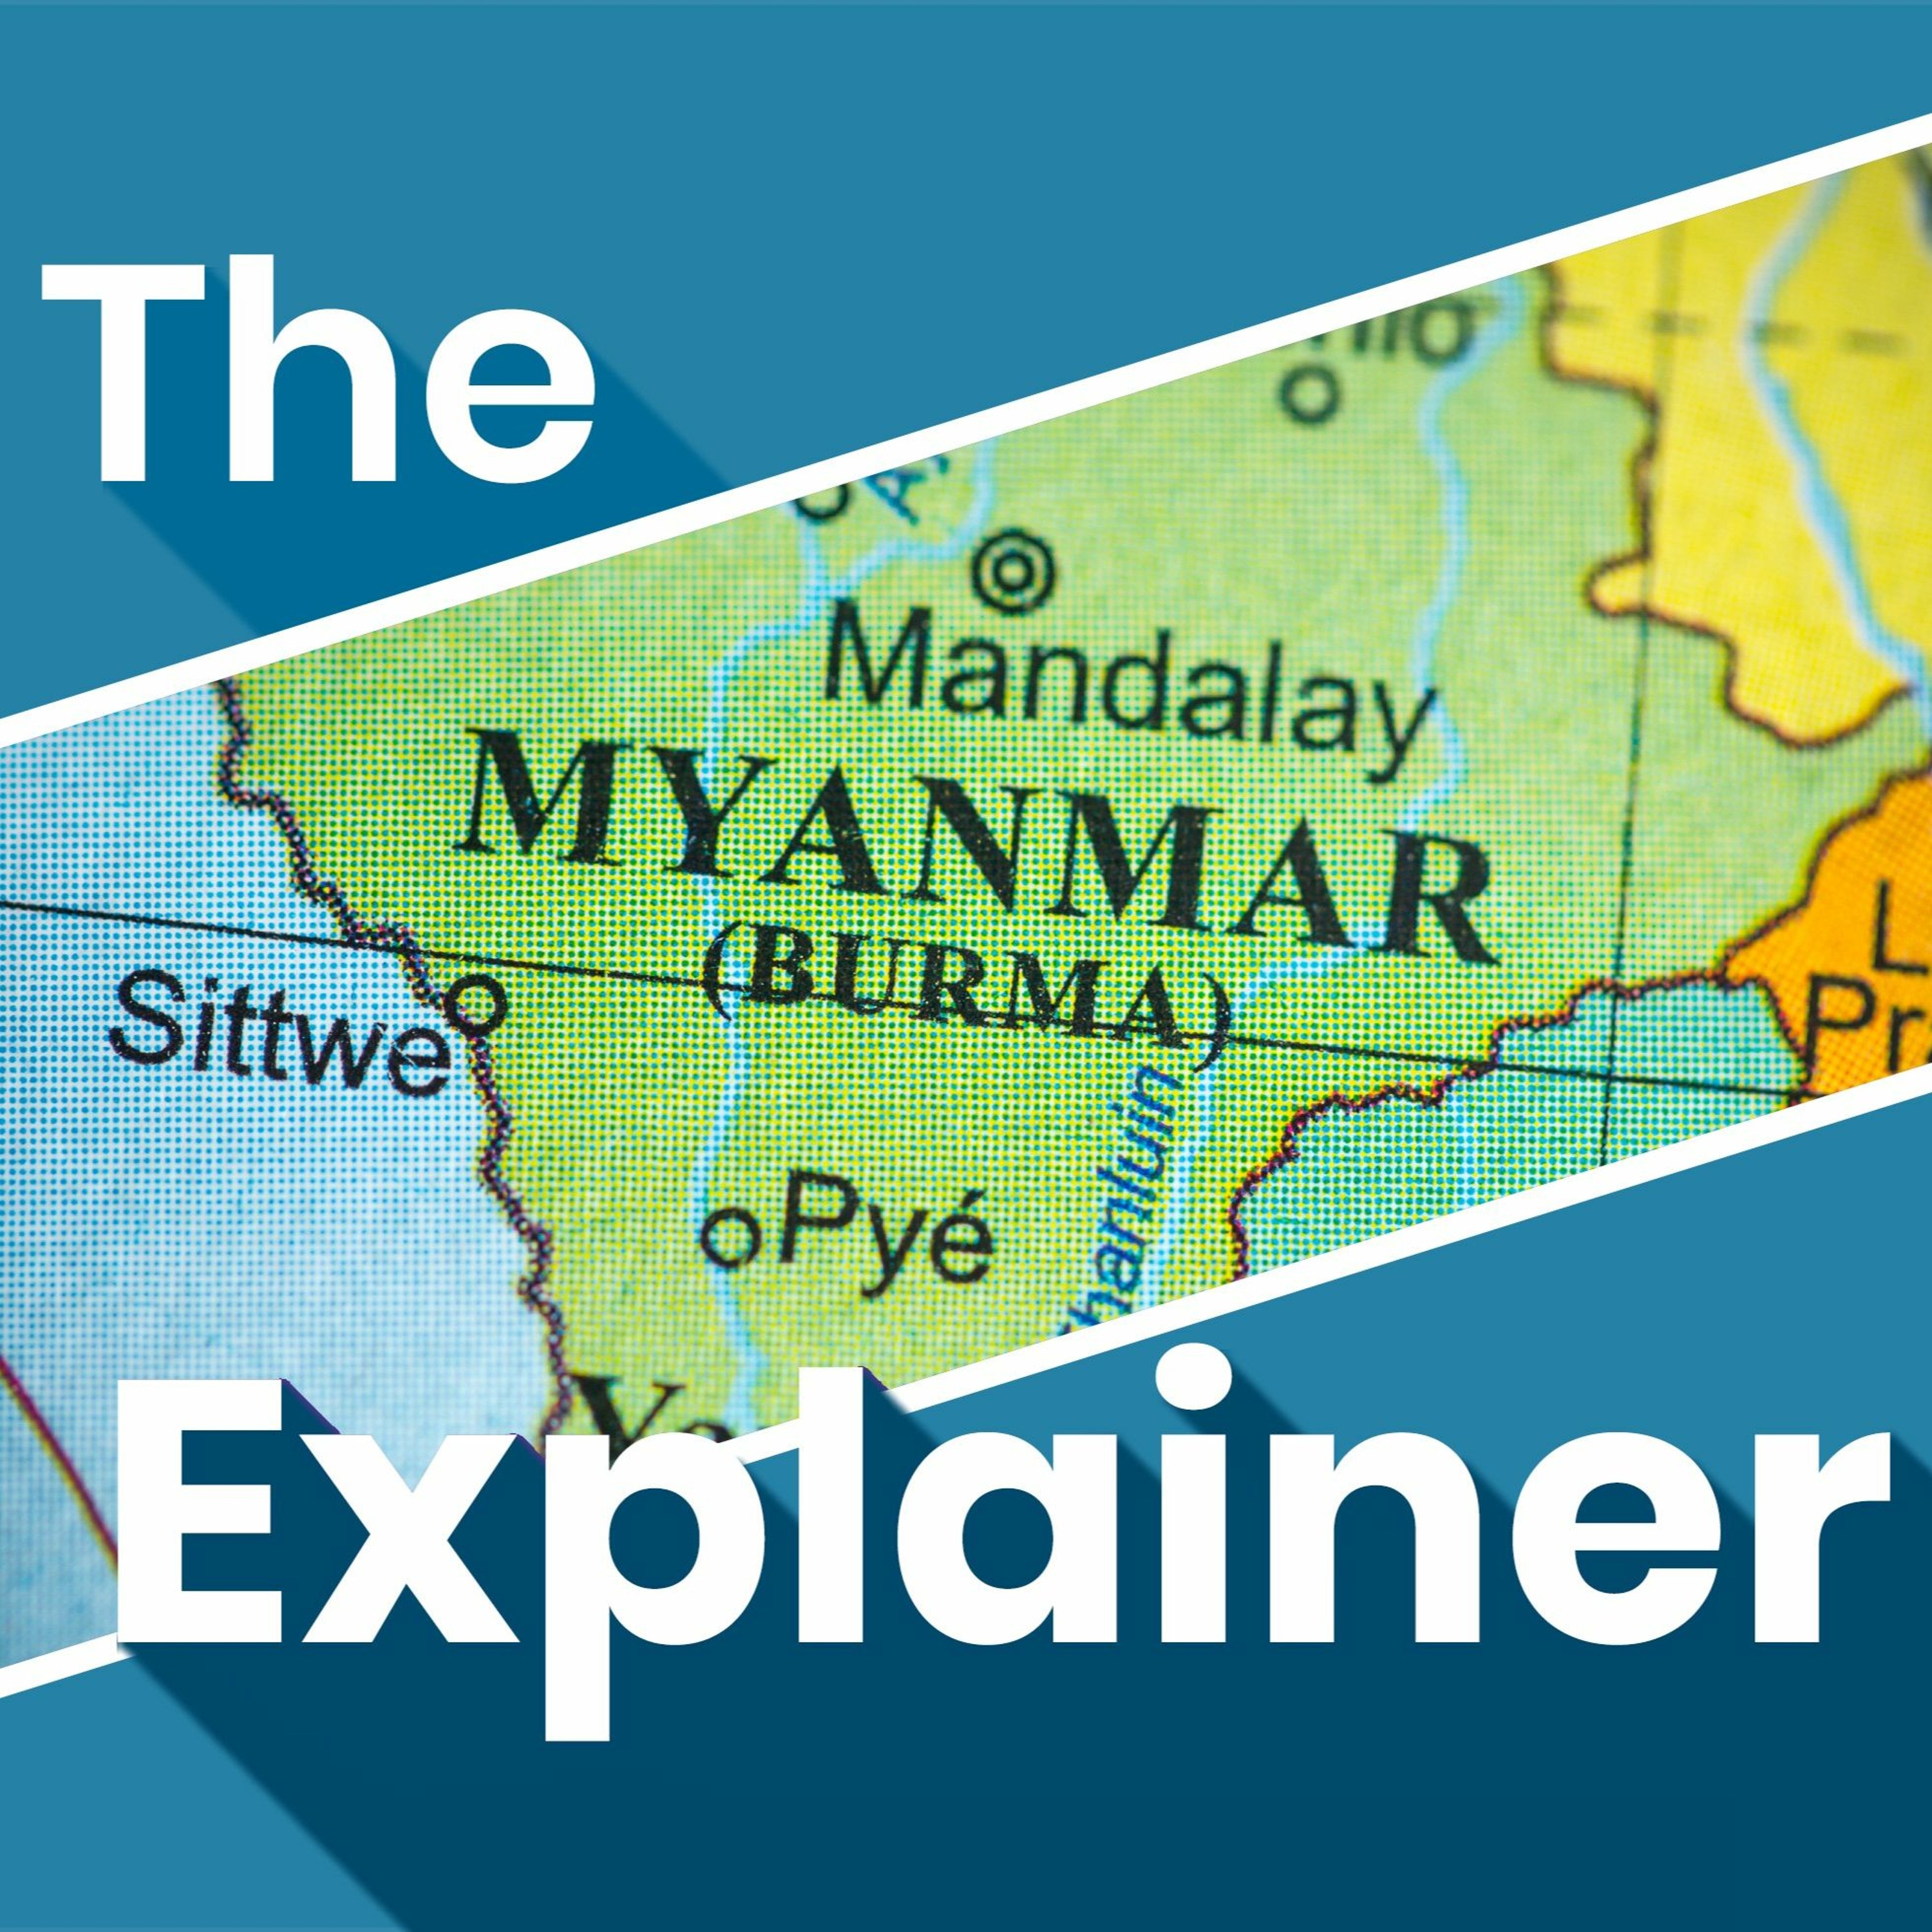 A forgotten crisis - what is happening to the Rohingya minority fleeing Myanmar?